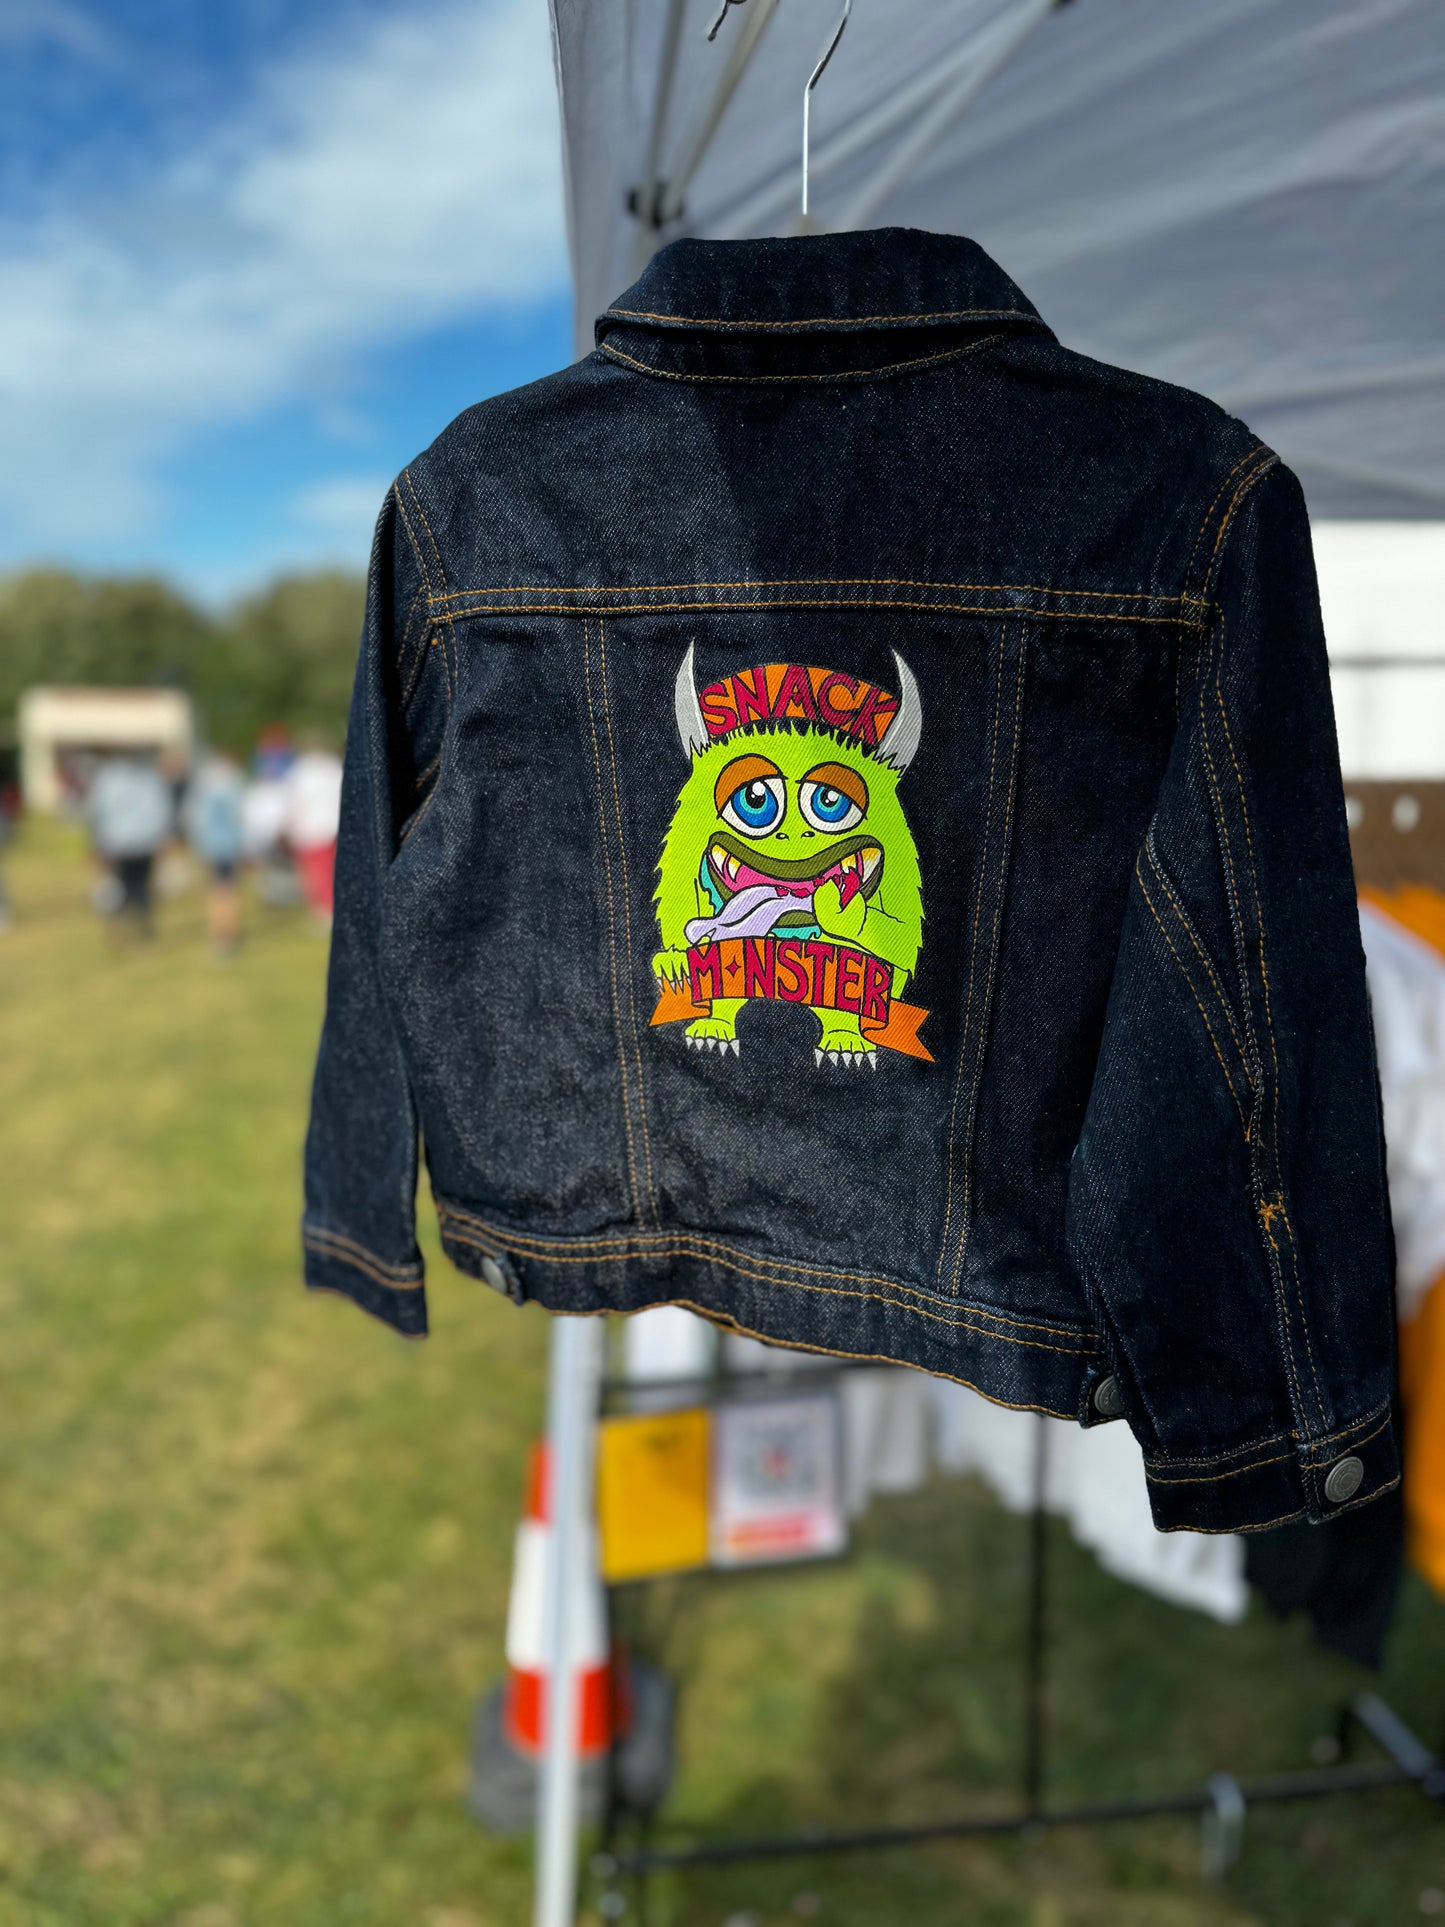 "Snack Monster" Hand-Painted Children's Denim Jacket